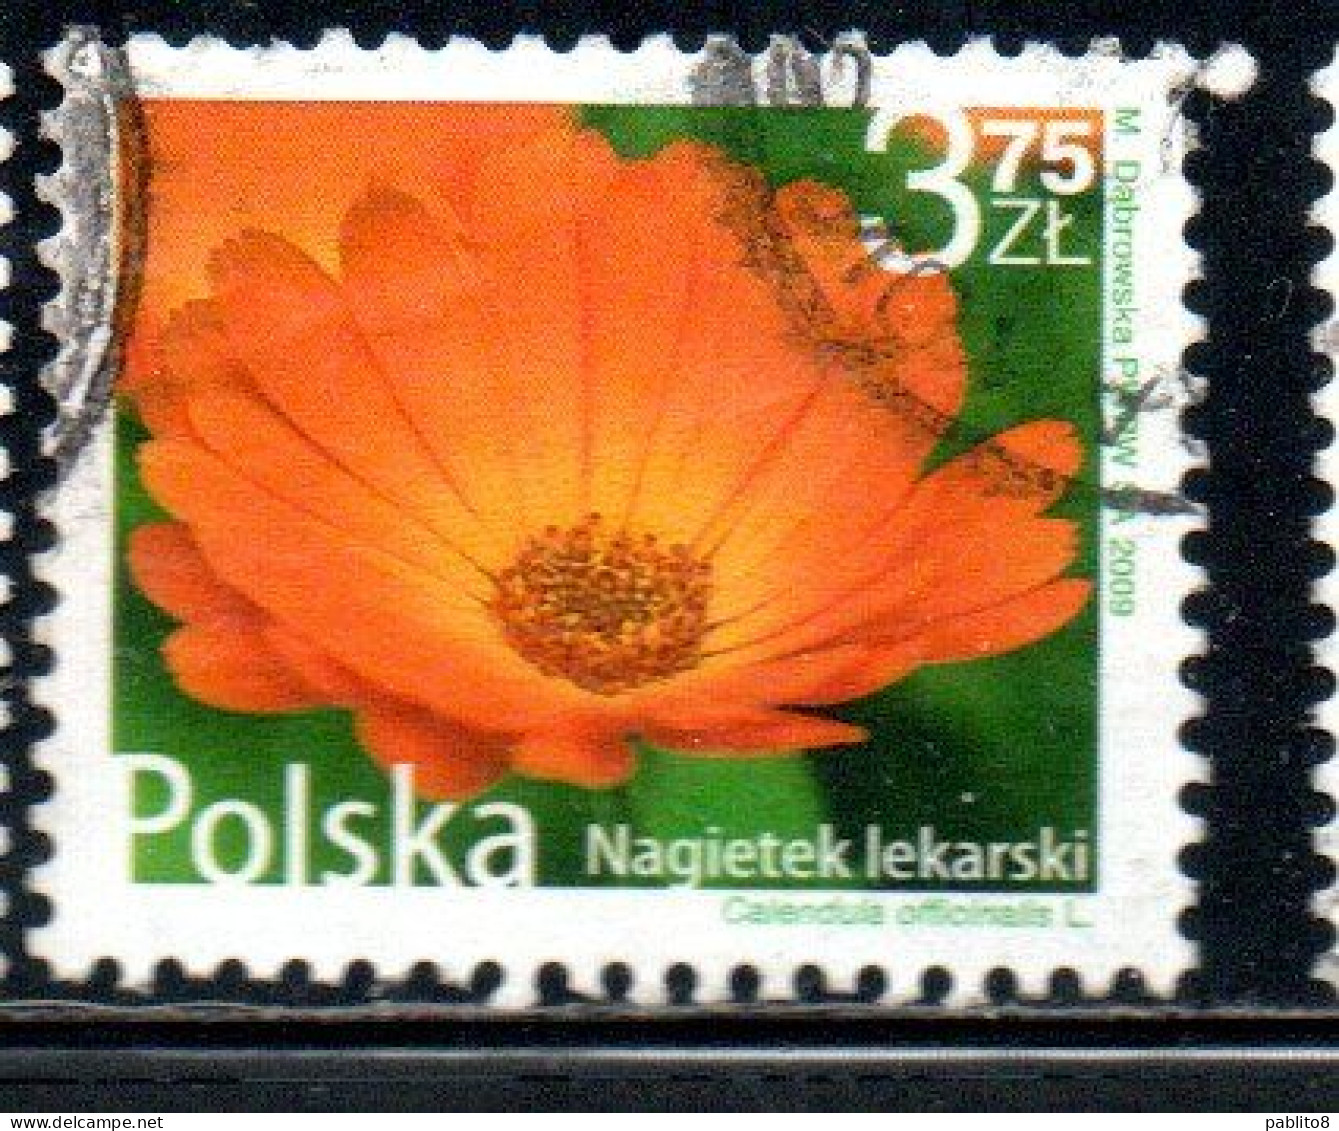 POLONIA POLAND POLSKA 2009 FRUIT AND FLOWERS CALENDULA OFFICINALIS 3.75z USED USATO OBLITERE' - Gebraucht